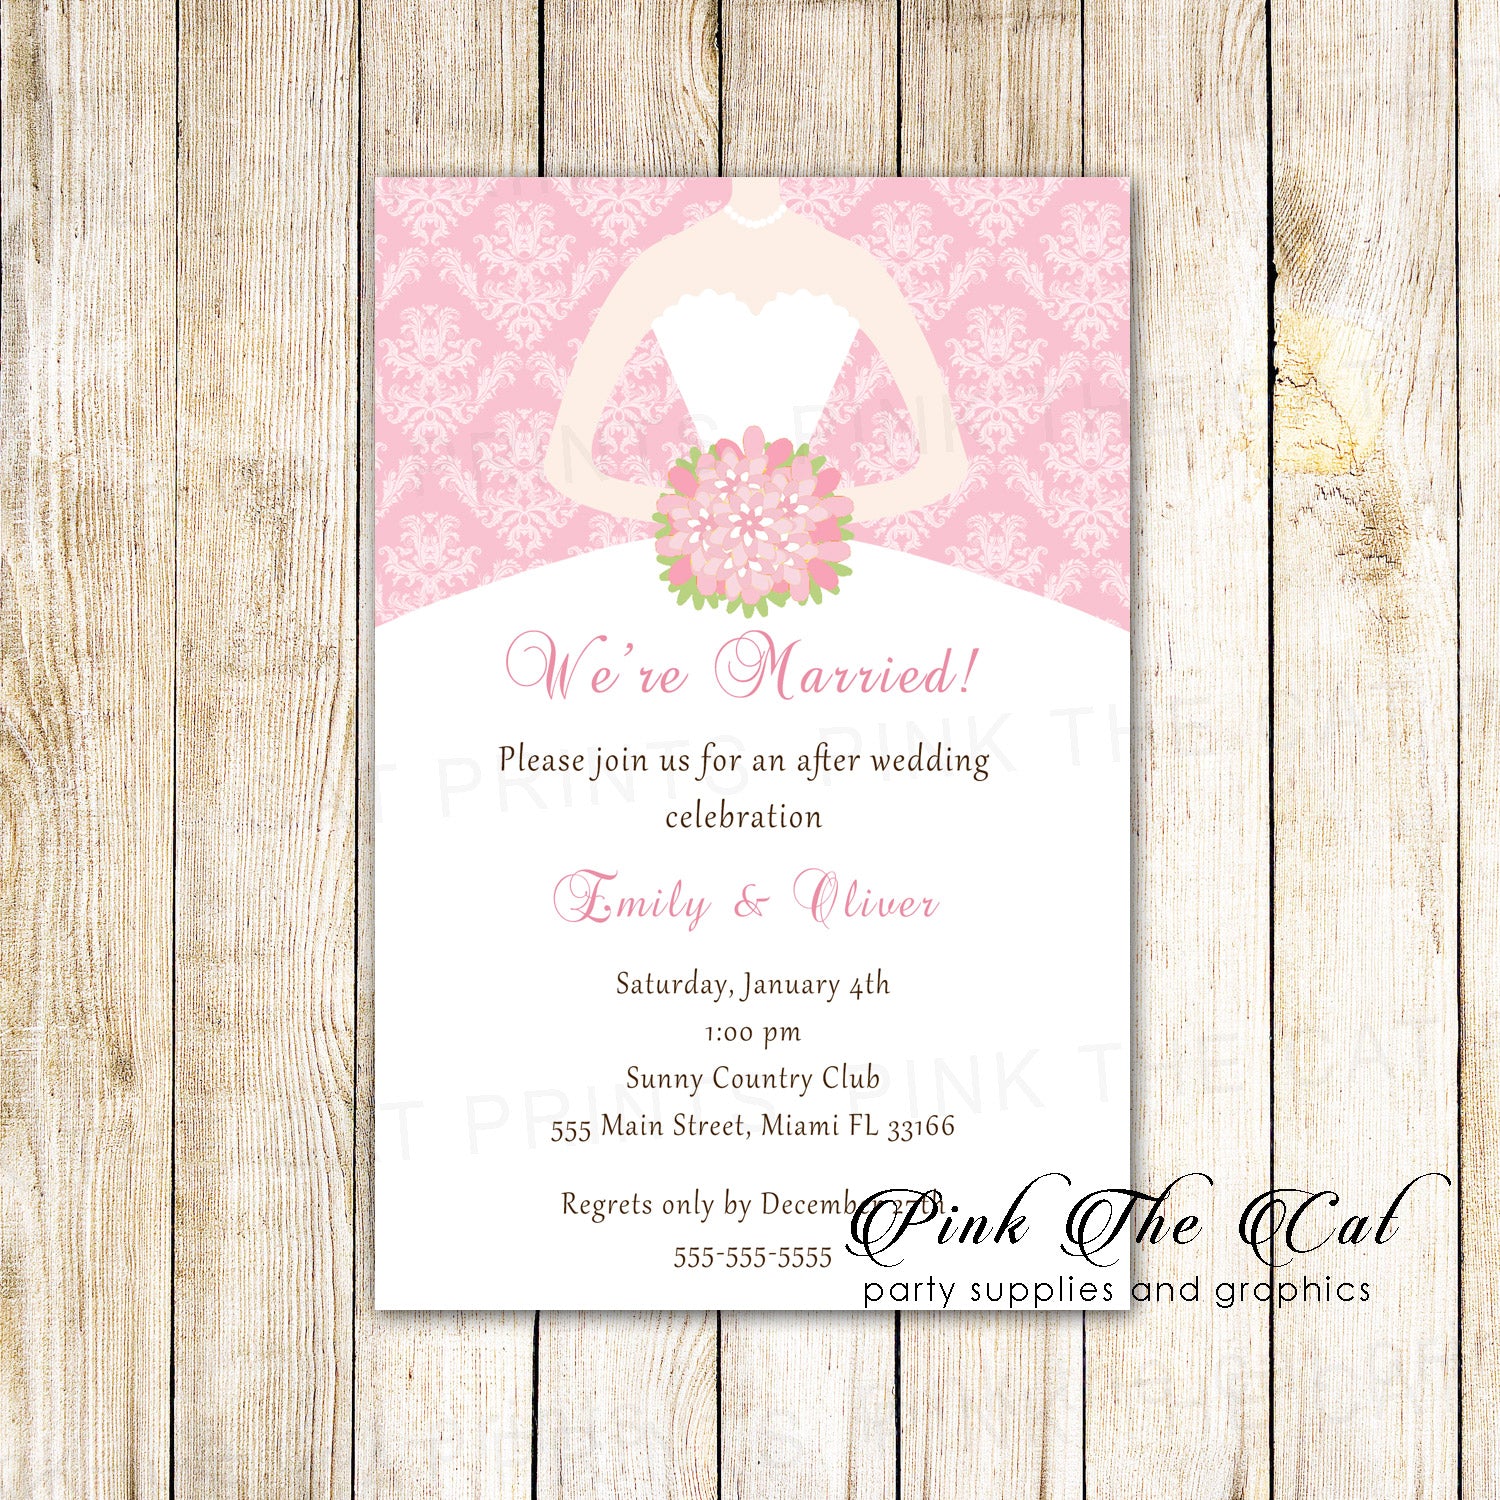 After wedding celebration invitations pink dress printable